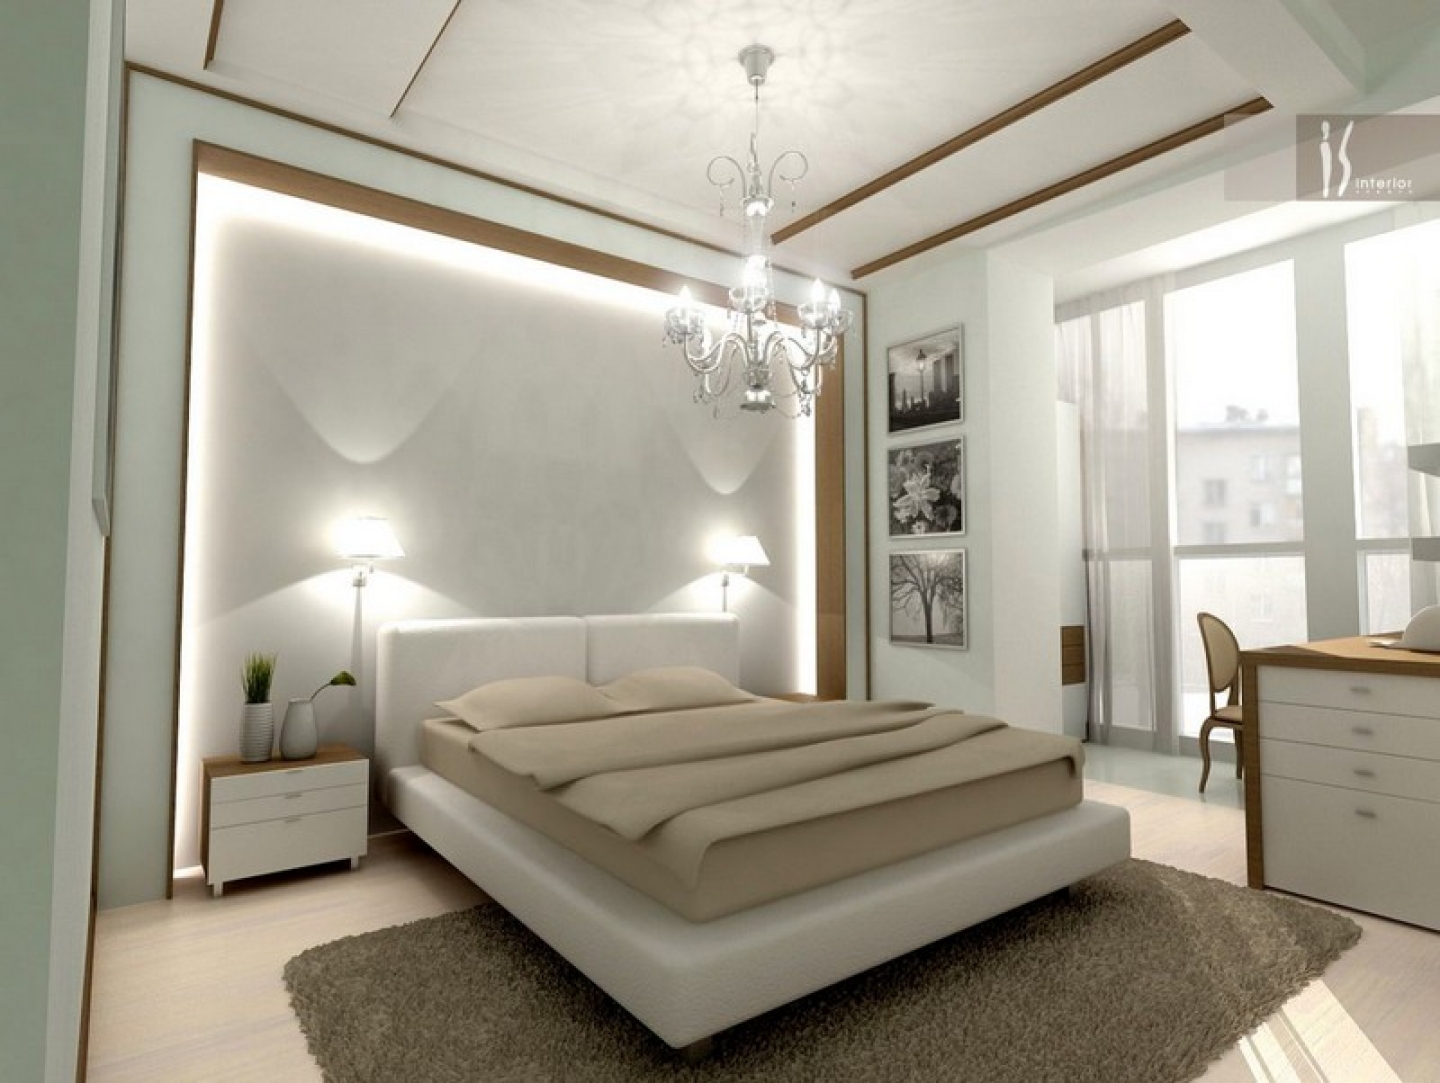 bedroom designs decoration decorating spalni couples couple interjer rug headboard ceiling idea